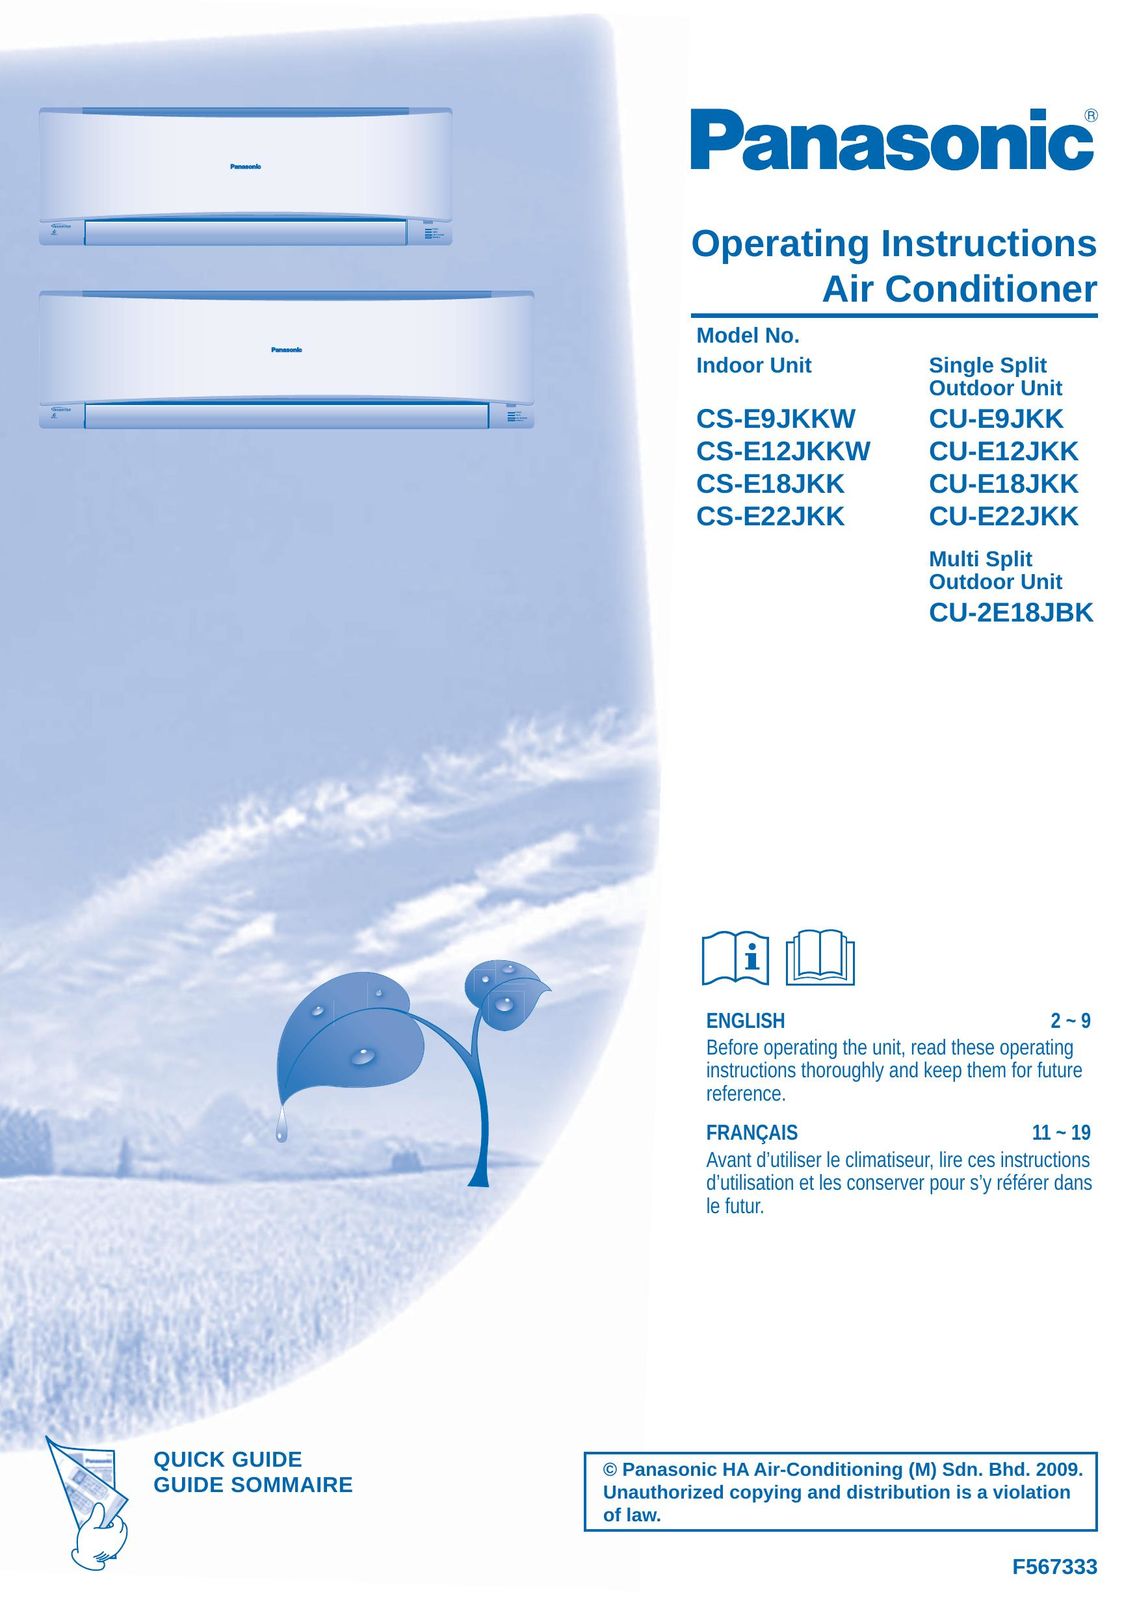 Panasonic CS-E12JKKW Air Conditioner User Manual